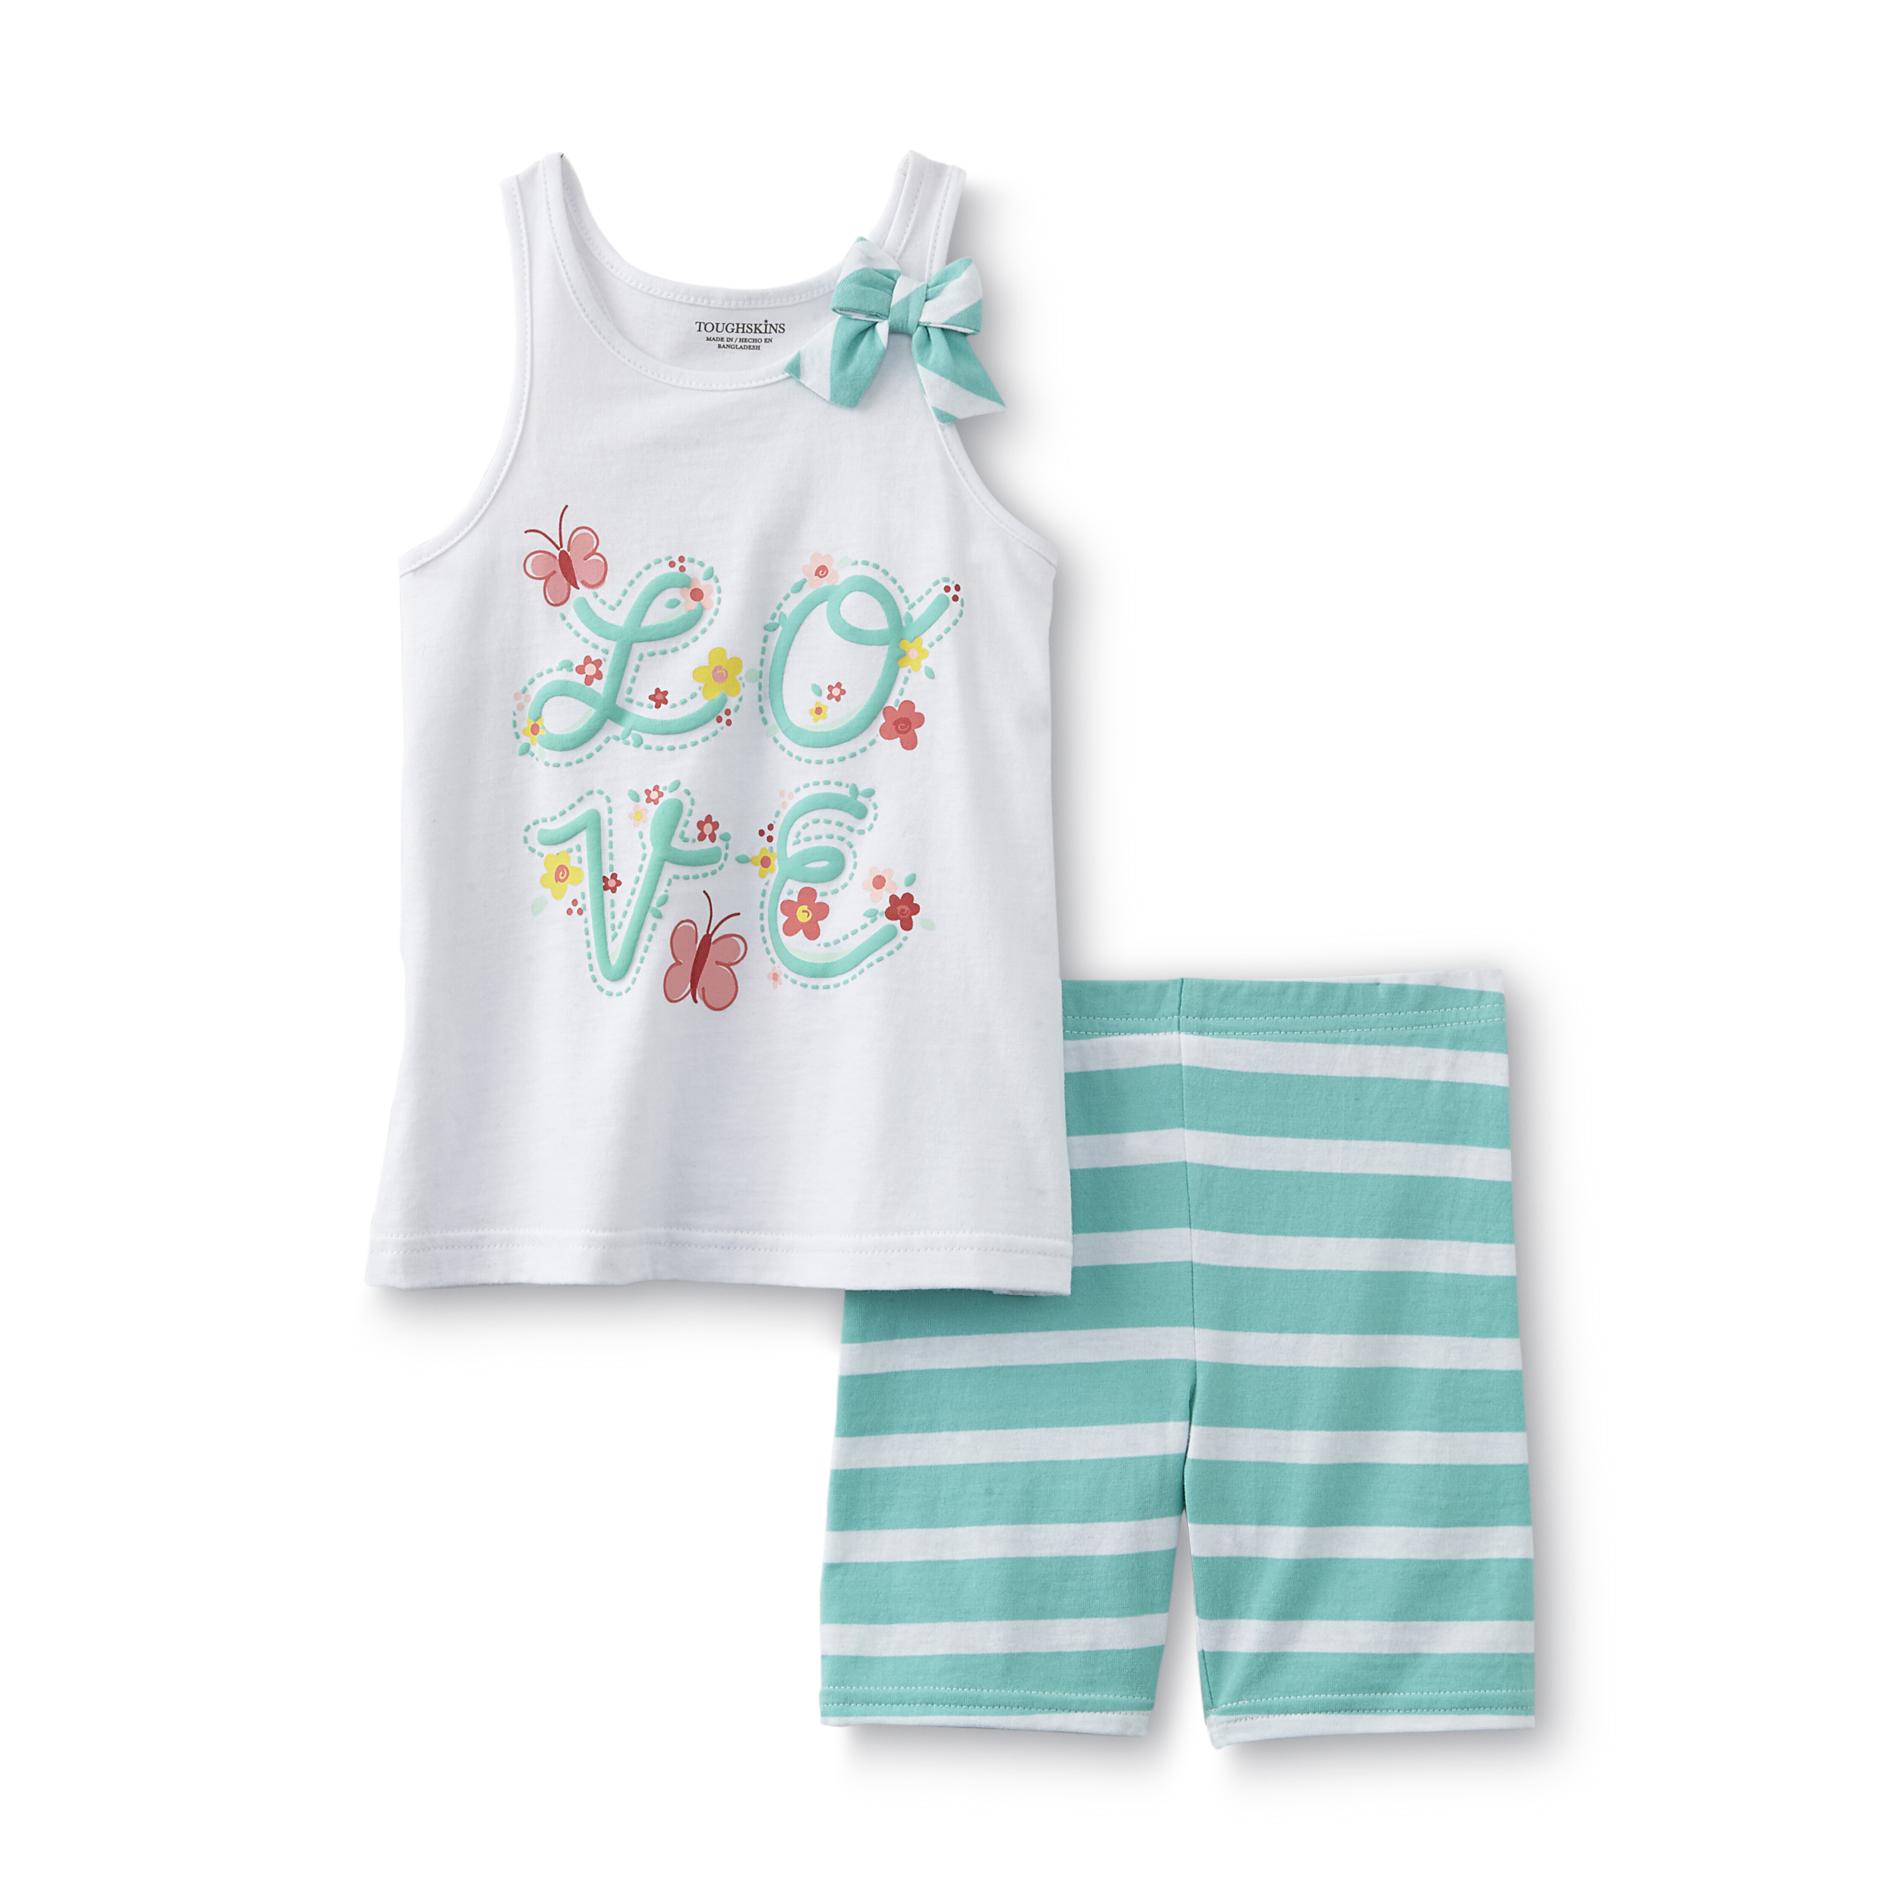 Toughskins Infant & Toddler Girl's Tank Top & Shorts - Love